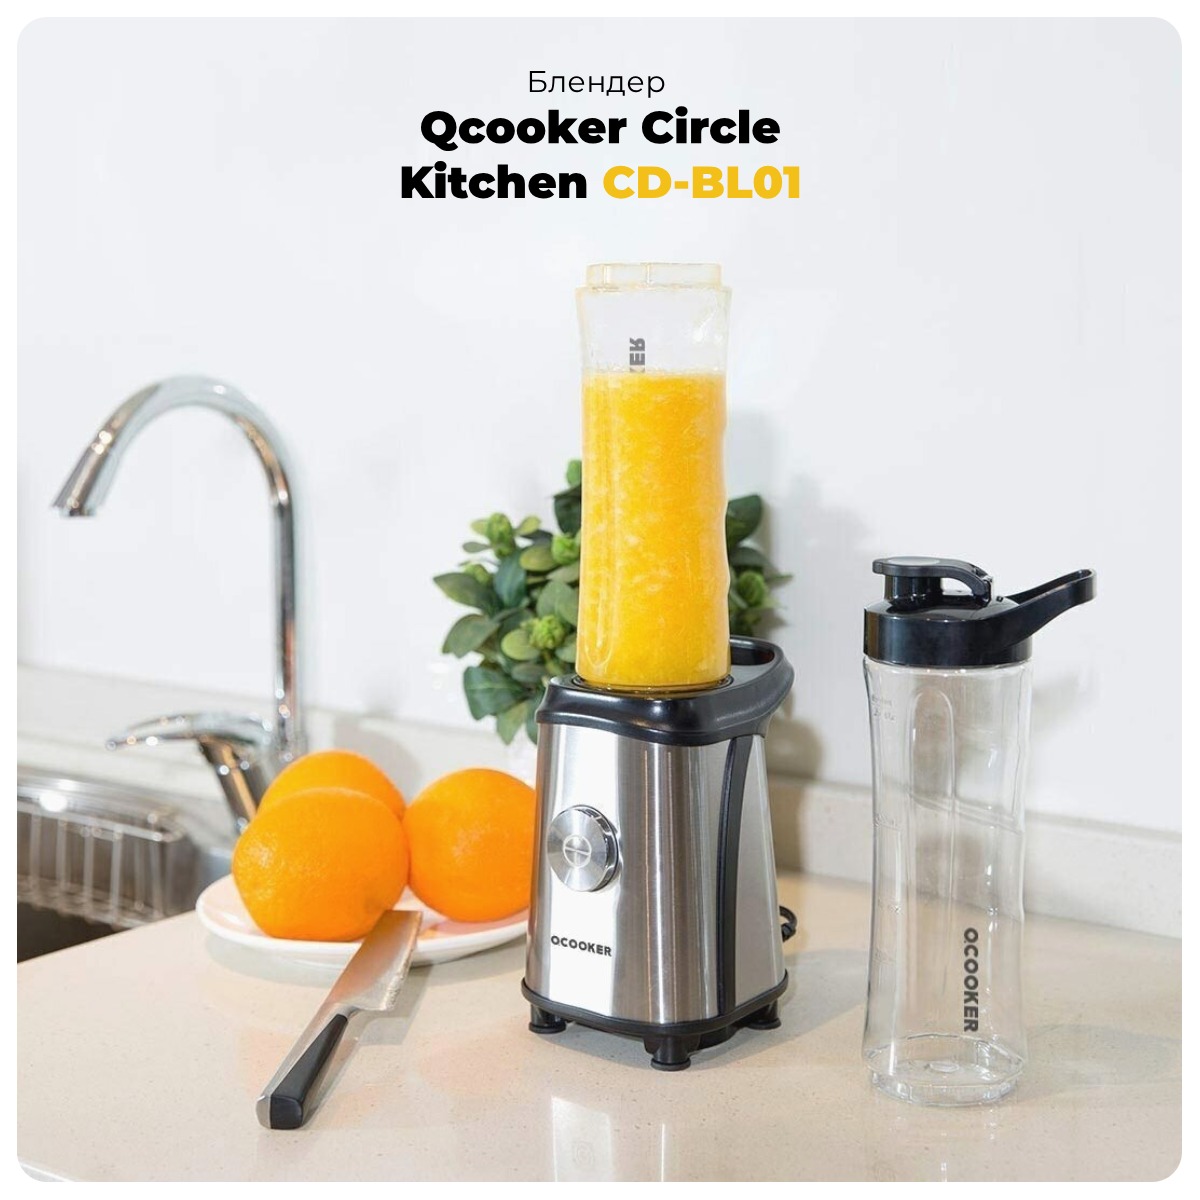 Qcooker-Circle-Kitchen-CD-BL01-01